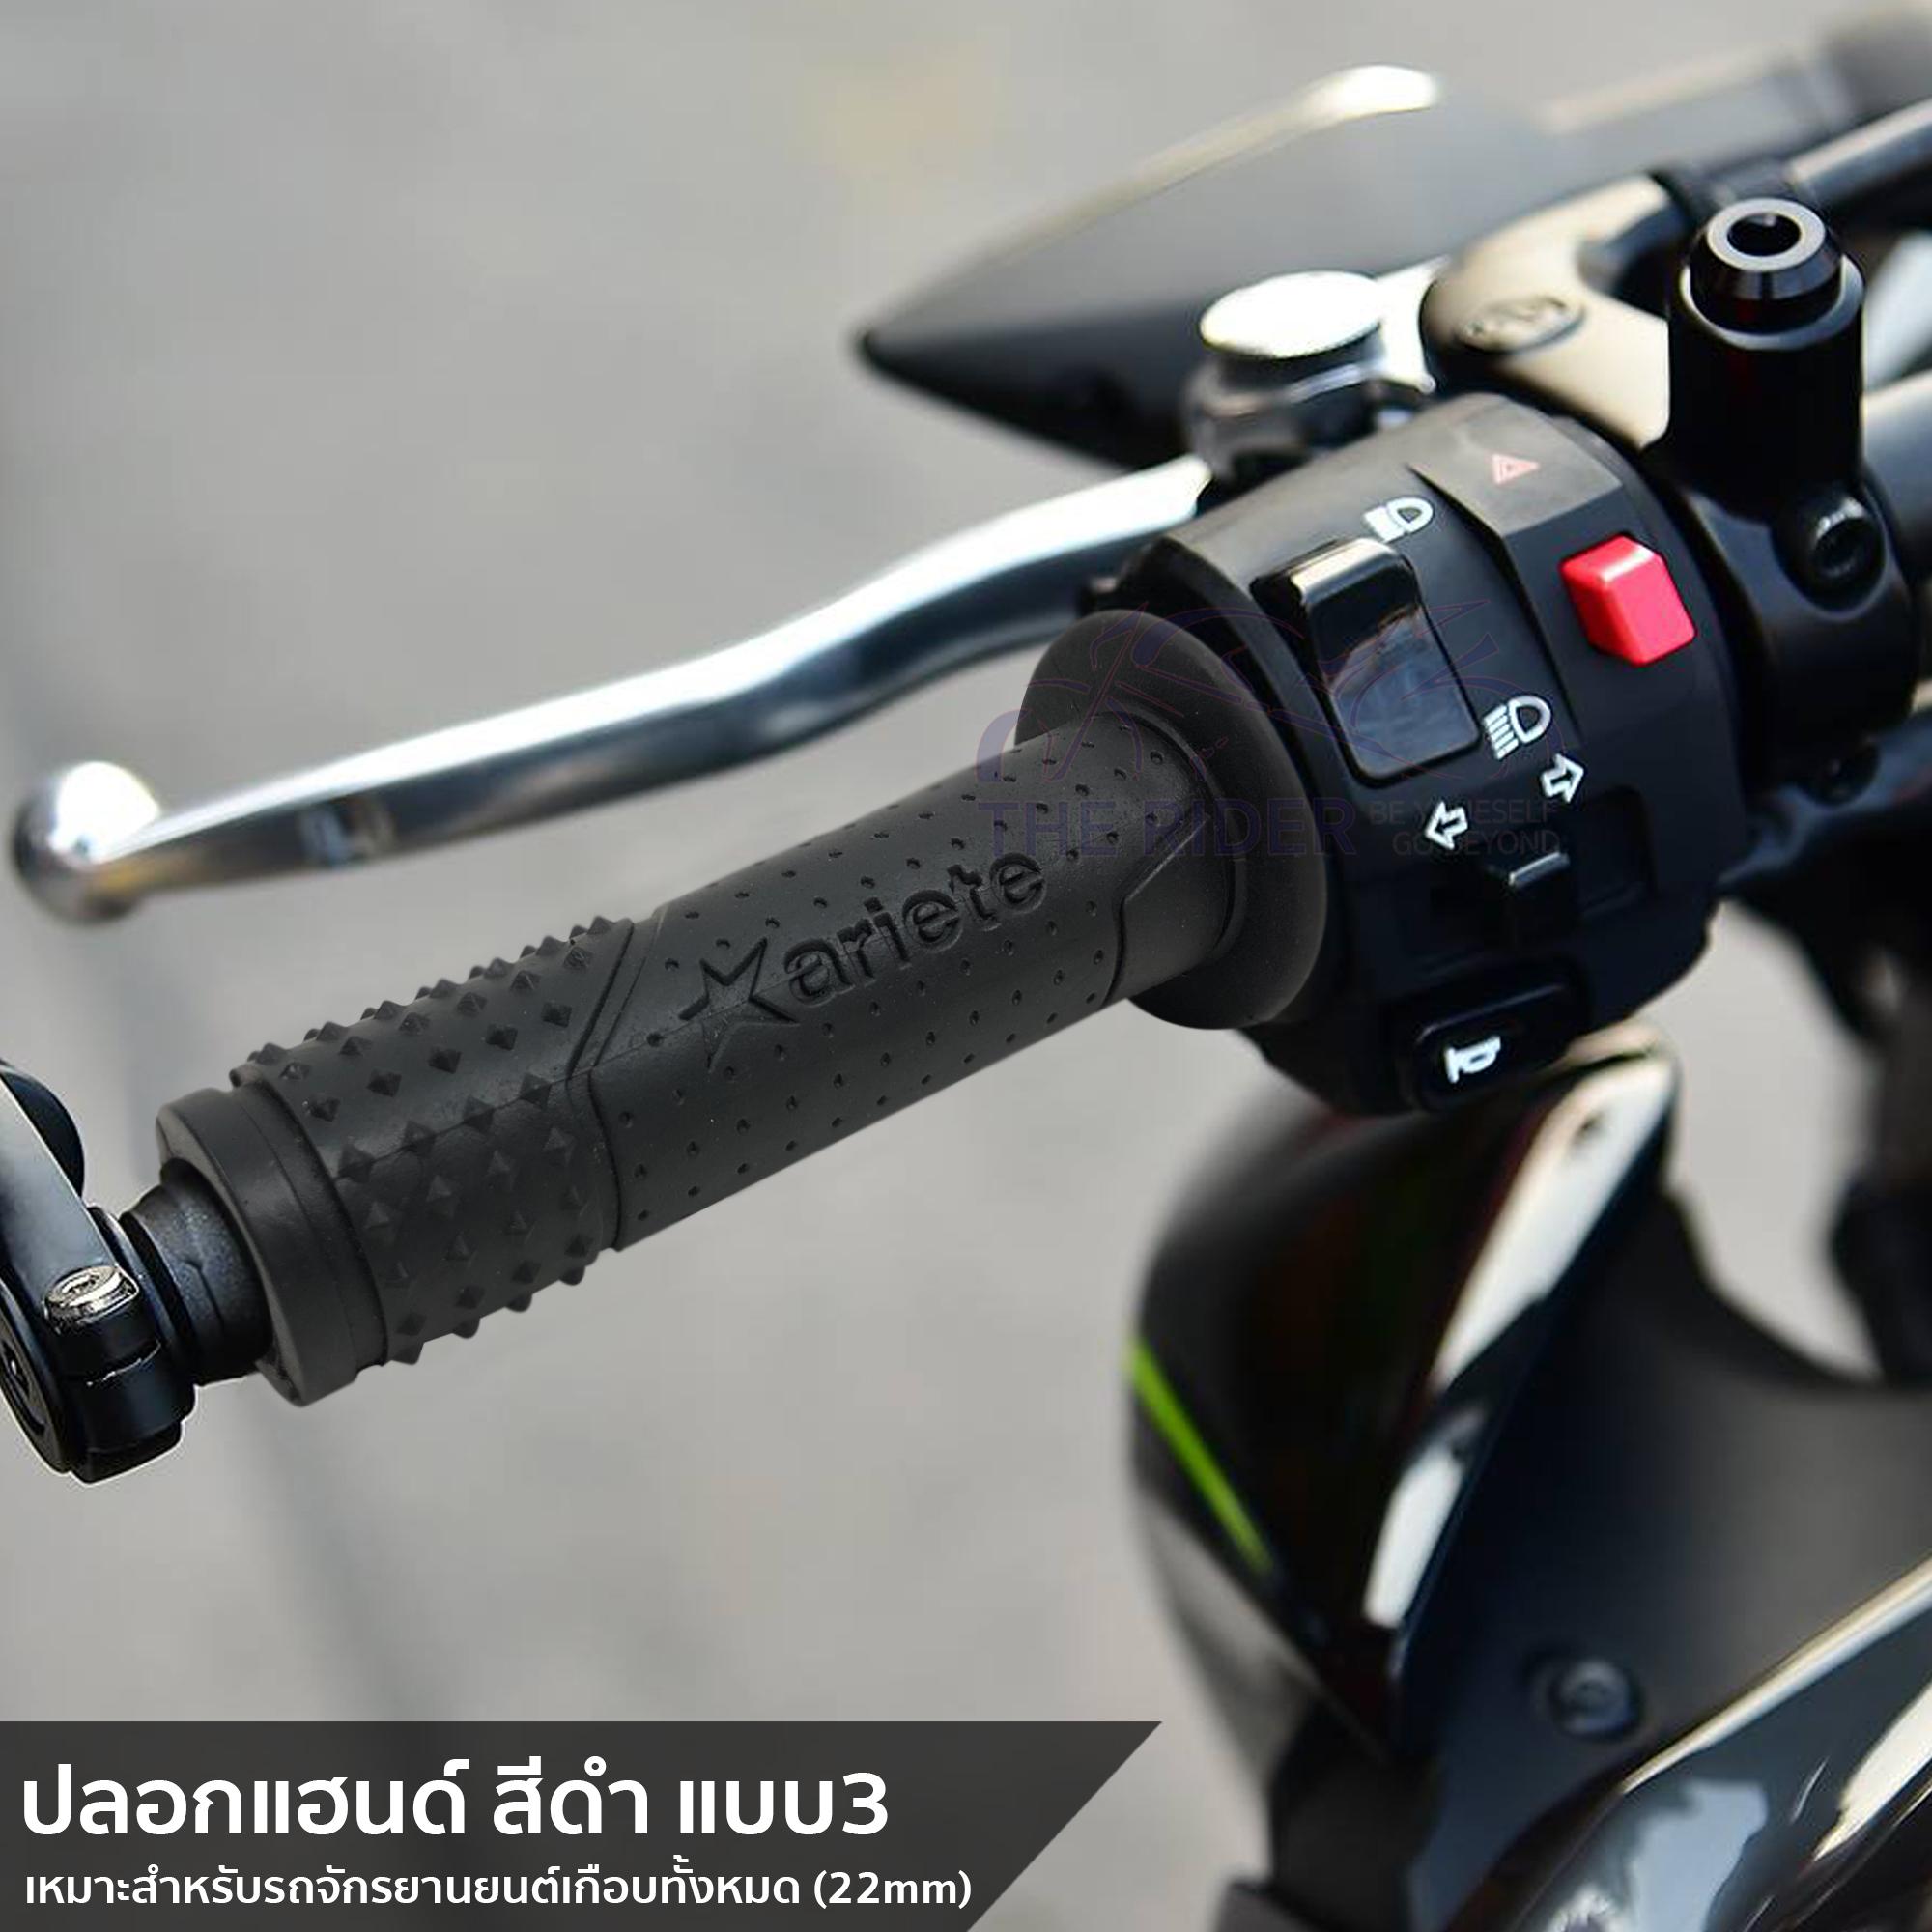 The Riderr ปลอกแฮนด์ แบบที่3 มือจับรถจักรยานยนต์ 1คู่ สำหรับมอไซค์ ขนาด 22 มิลลิเมตร สีดำ ปลอกแฮนด์